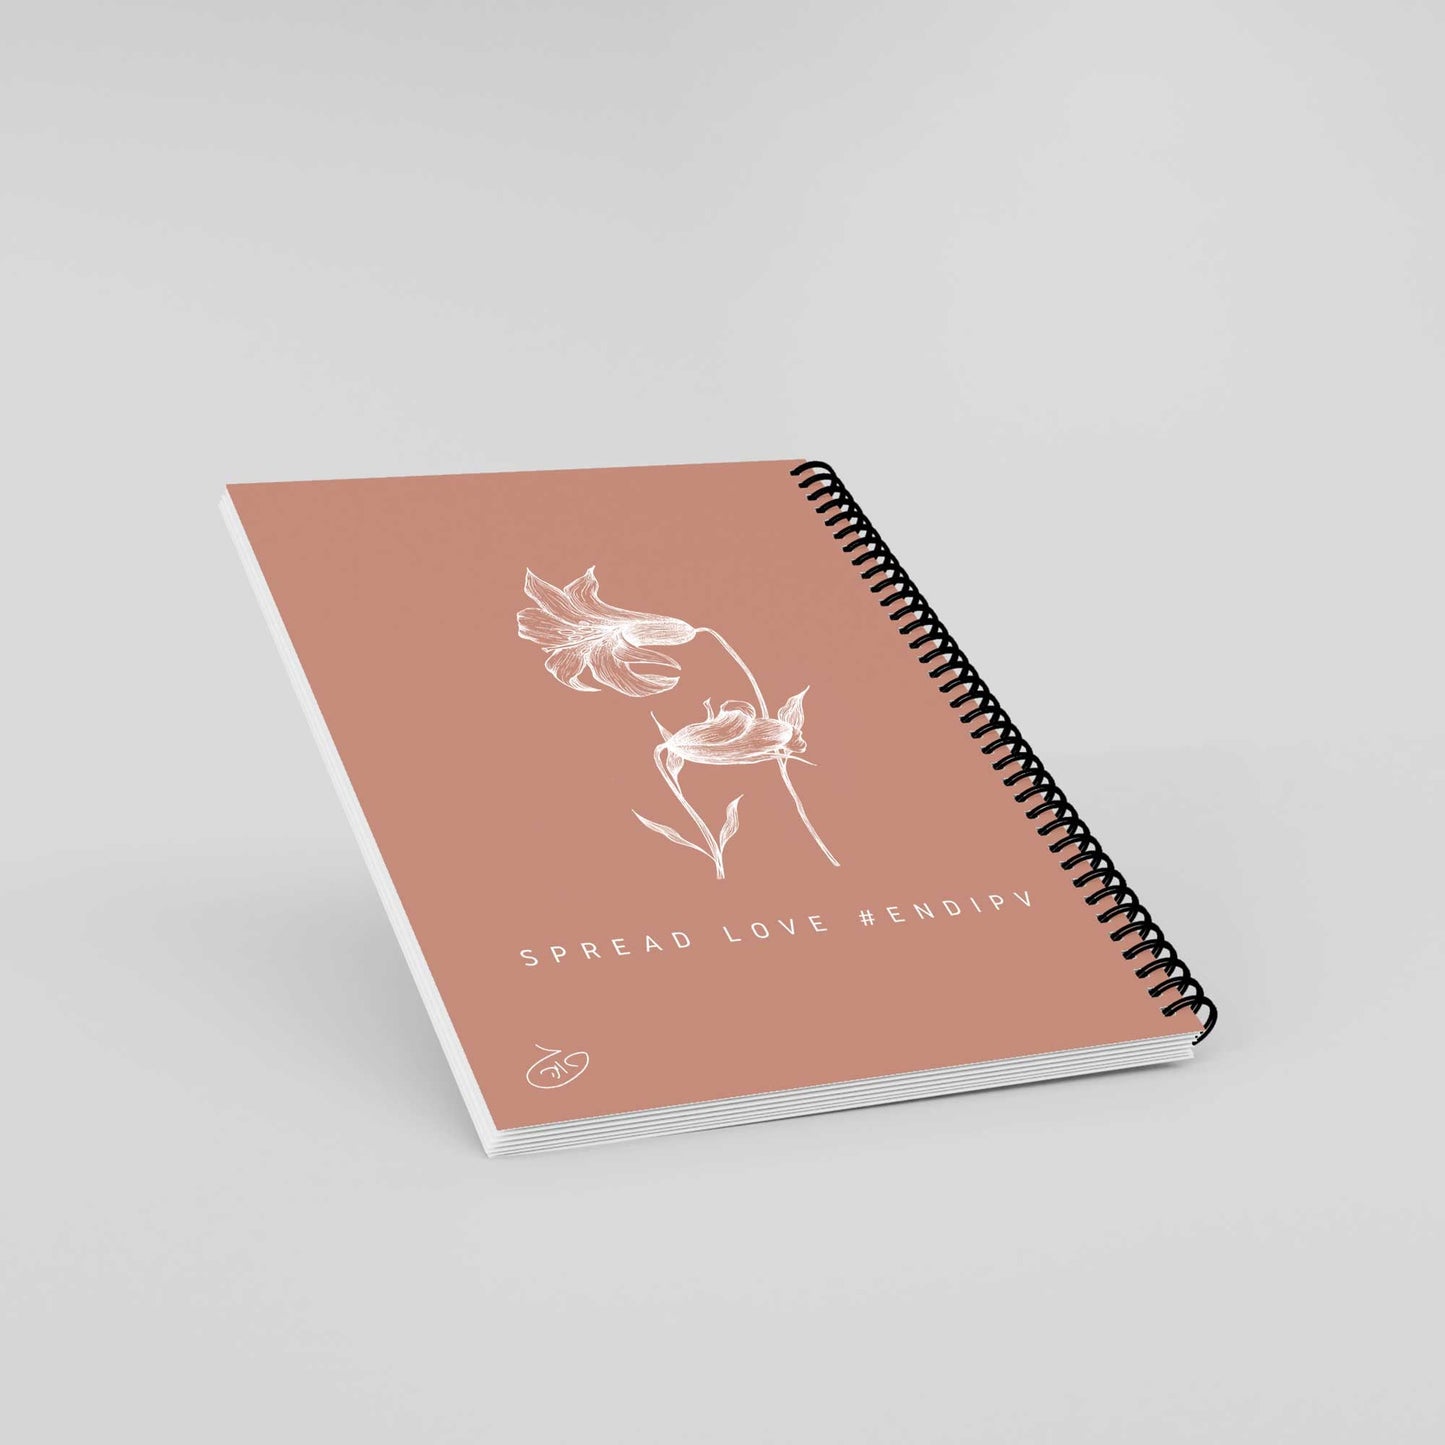 Hibiscuses Flower Notebook | Gaya's Drawing | מחברת ספירלה עם הציורים של גאיה